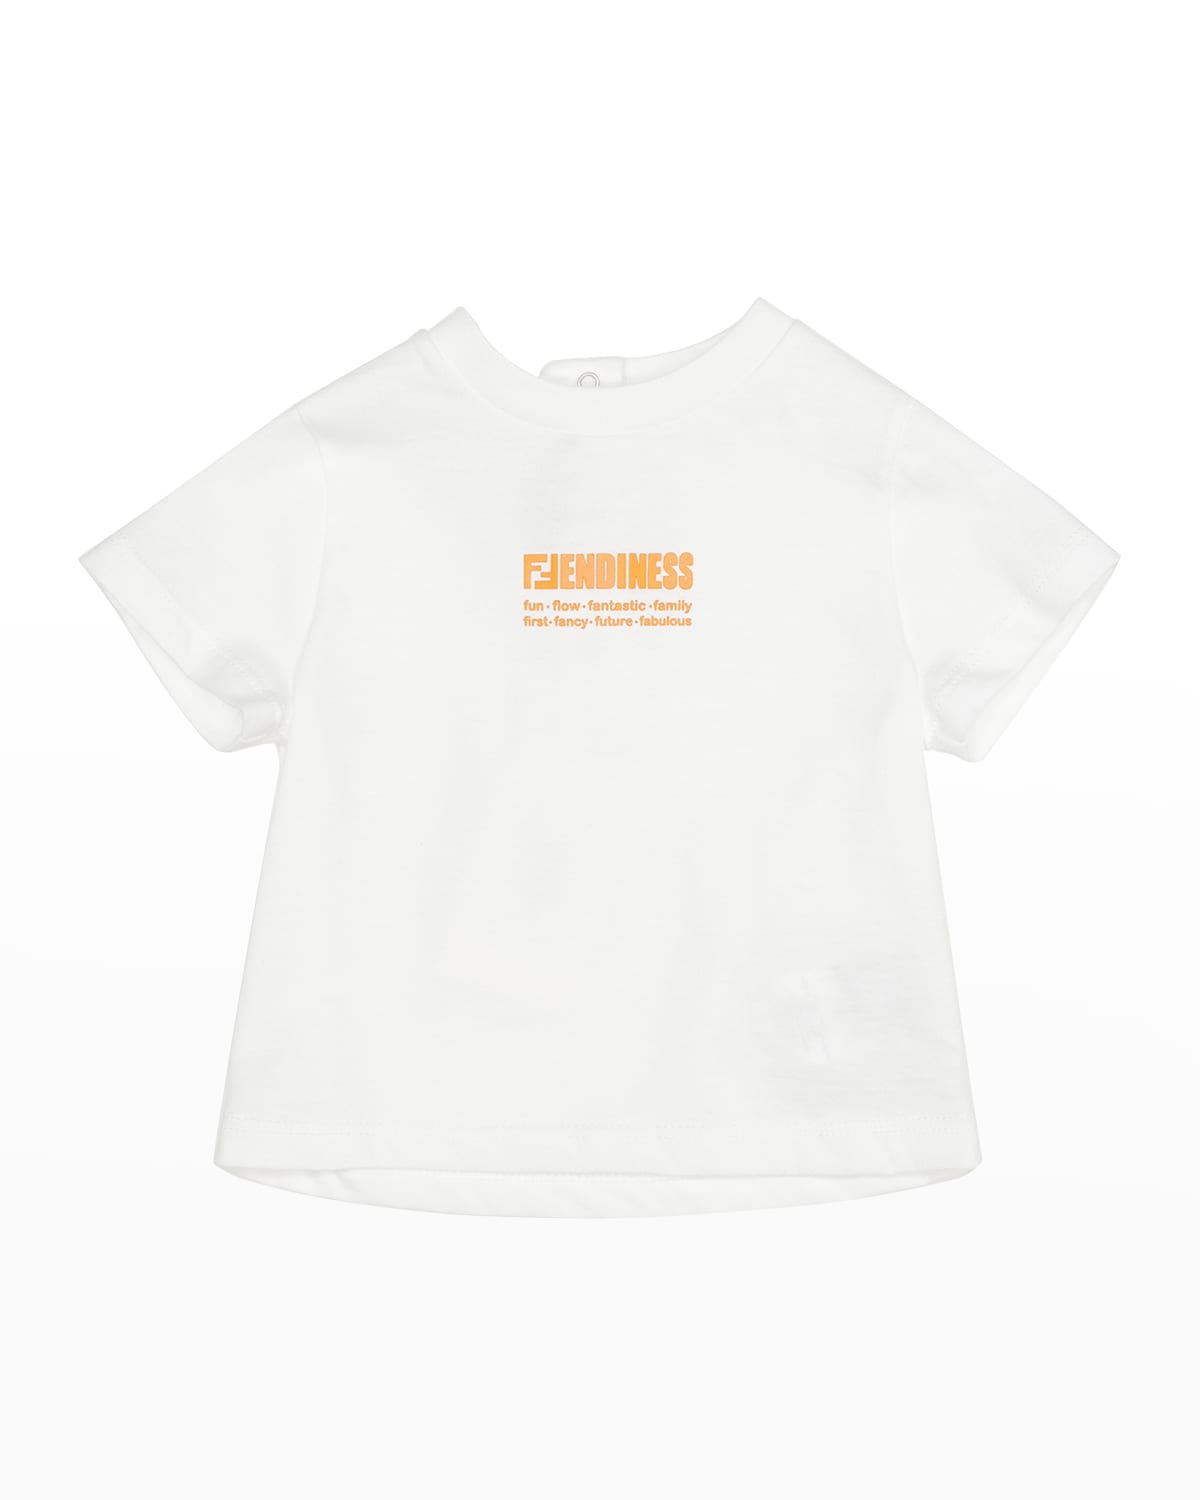 Kid's Fendiness Typographic T-Shirt, Size 12-24M